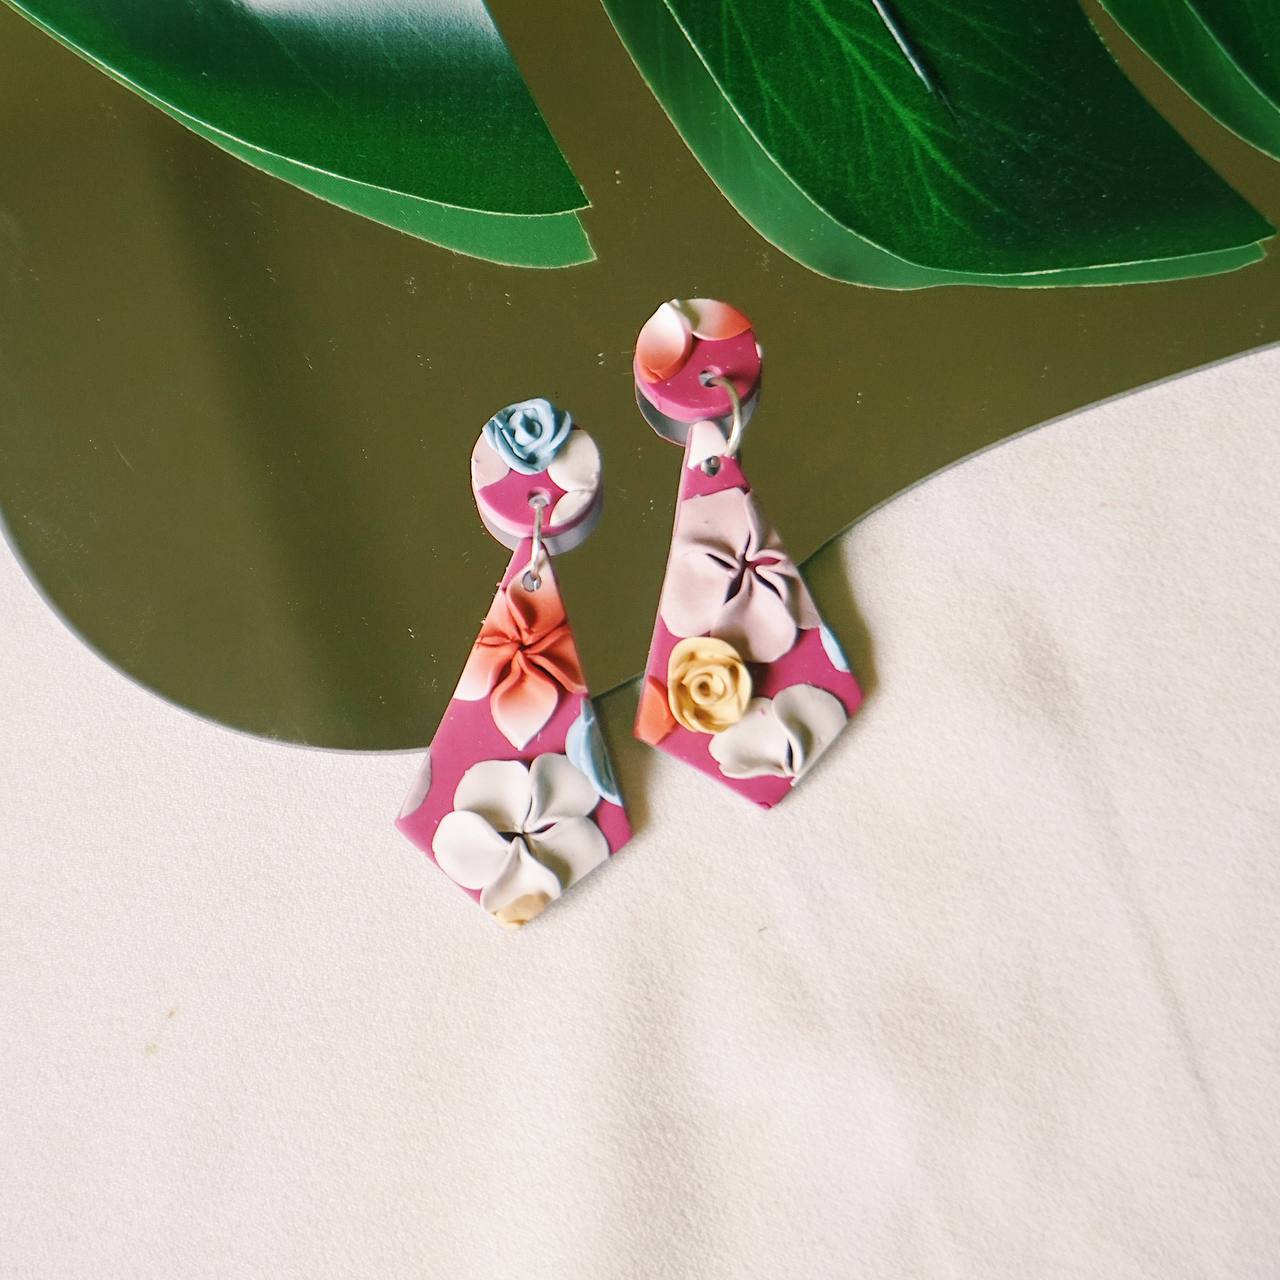 Fleur Garden - Handmade Polymer Clay Earrings